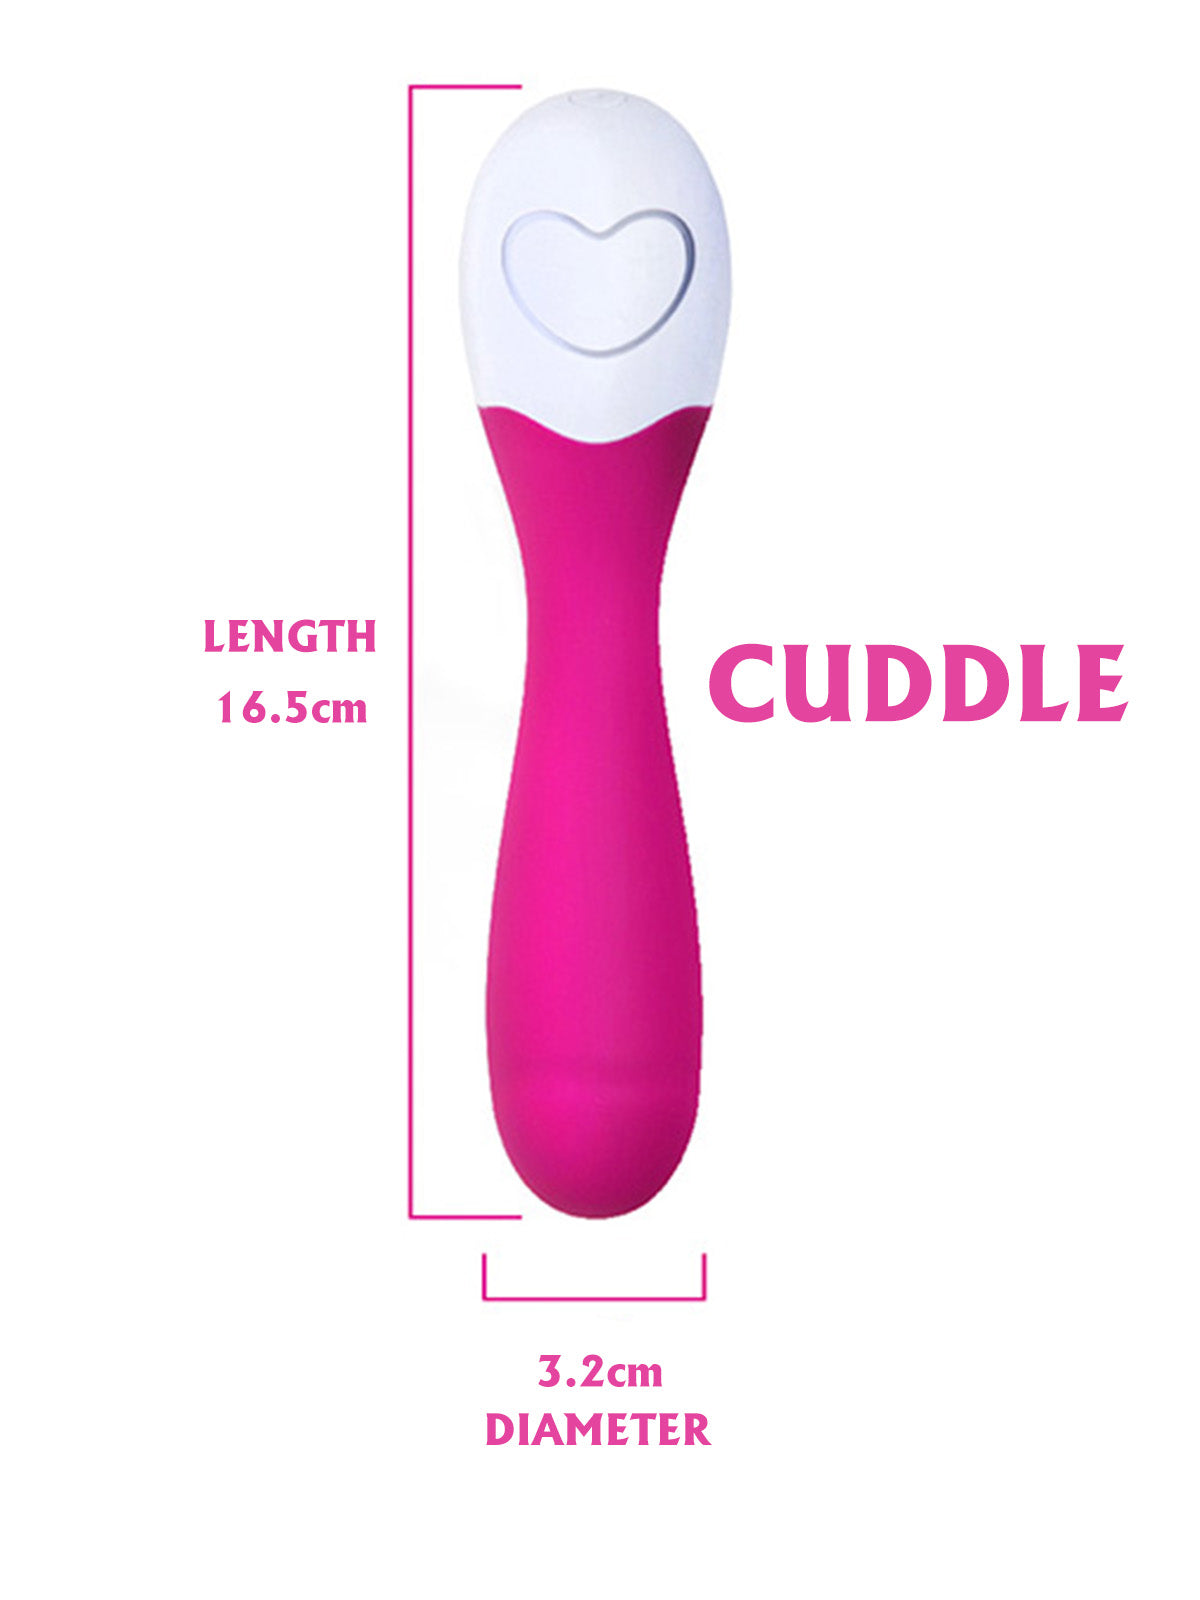 LoveLife Cuddle Vibe by OhMiBod Size